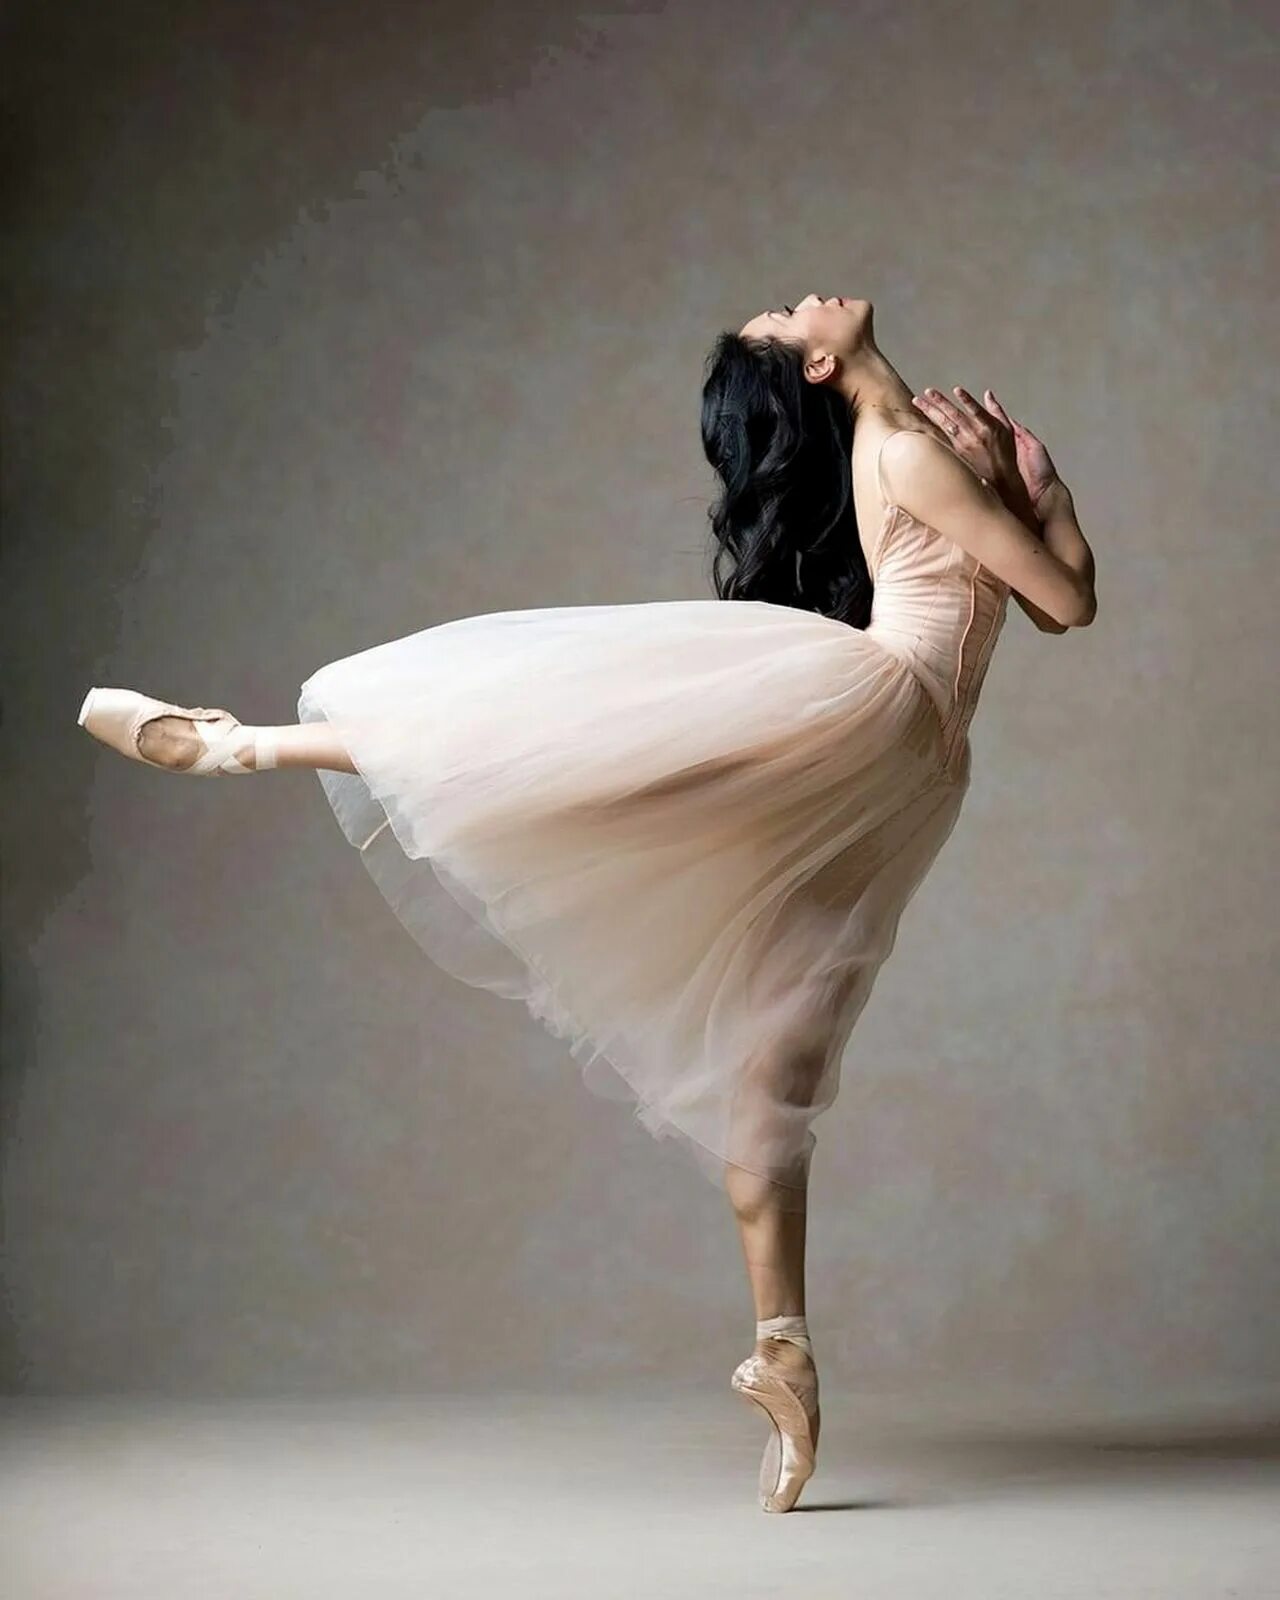 Балерина танцует. Балерины. Балерина со спины. Девушка балерина. Красивые балерины.